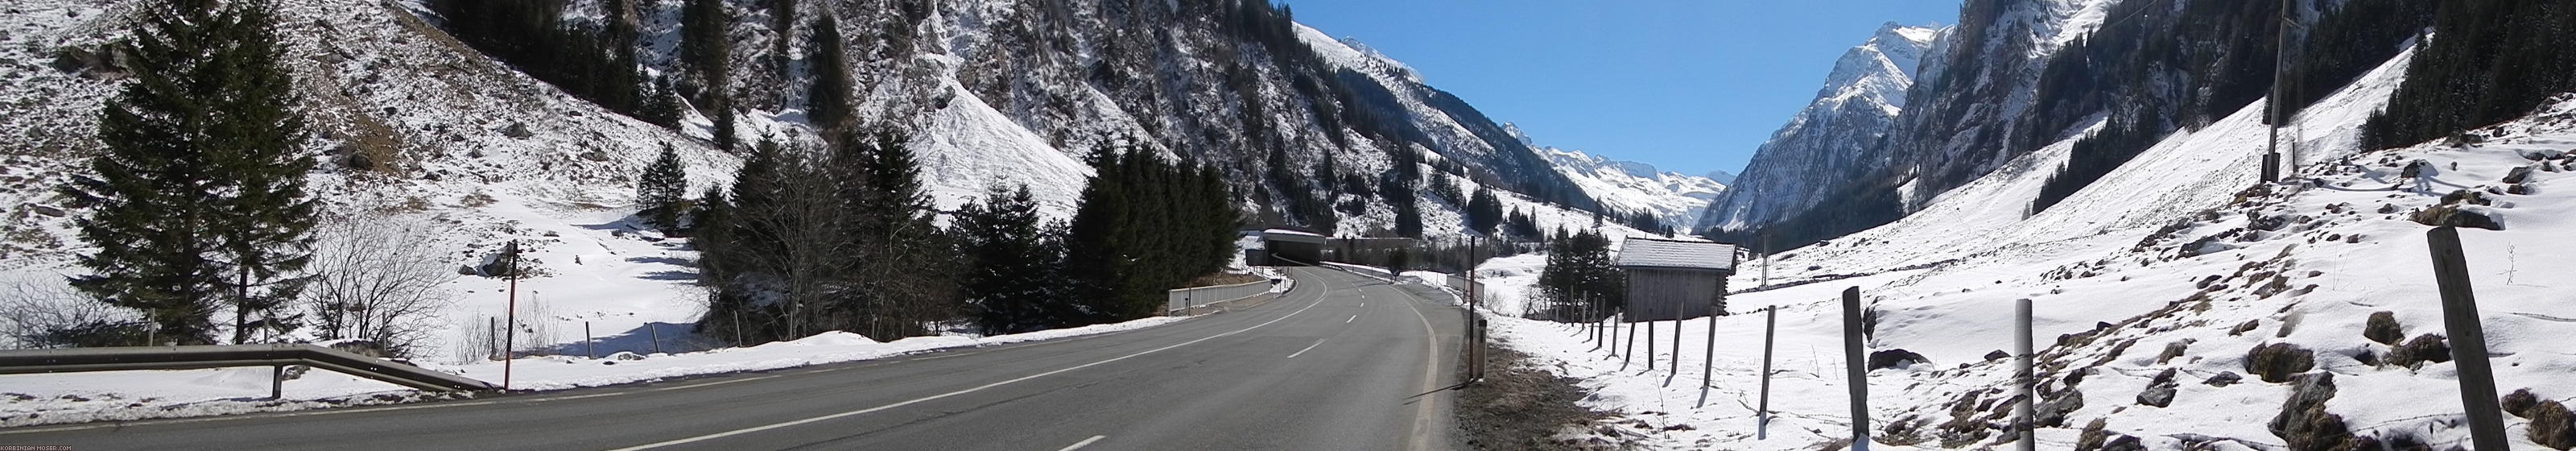 ﻿The Felbertauern Highway has really impressive mountain panoramas.